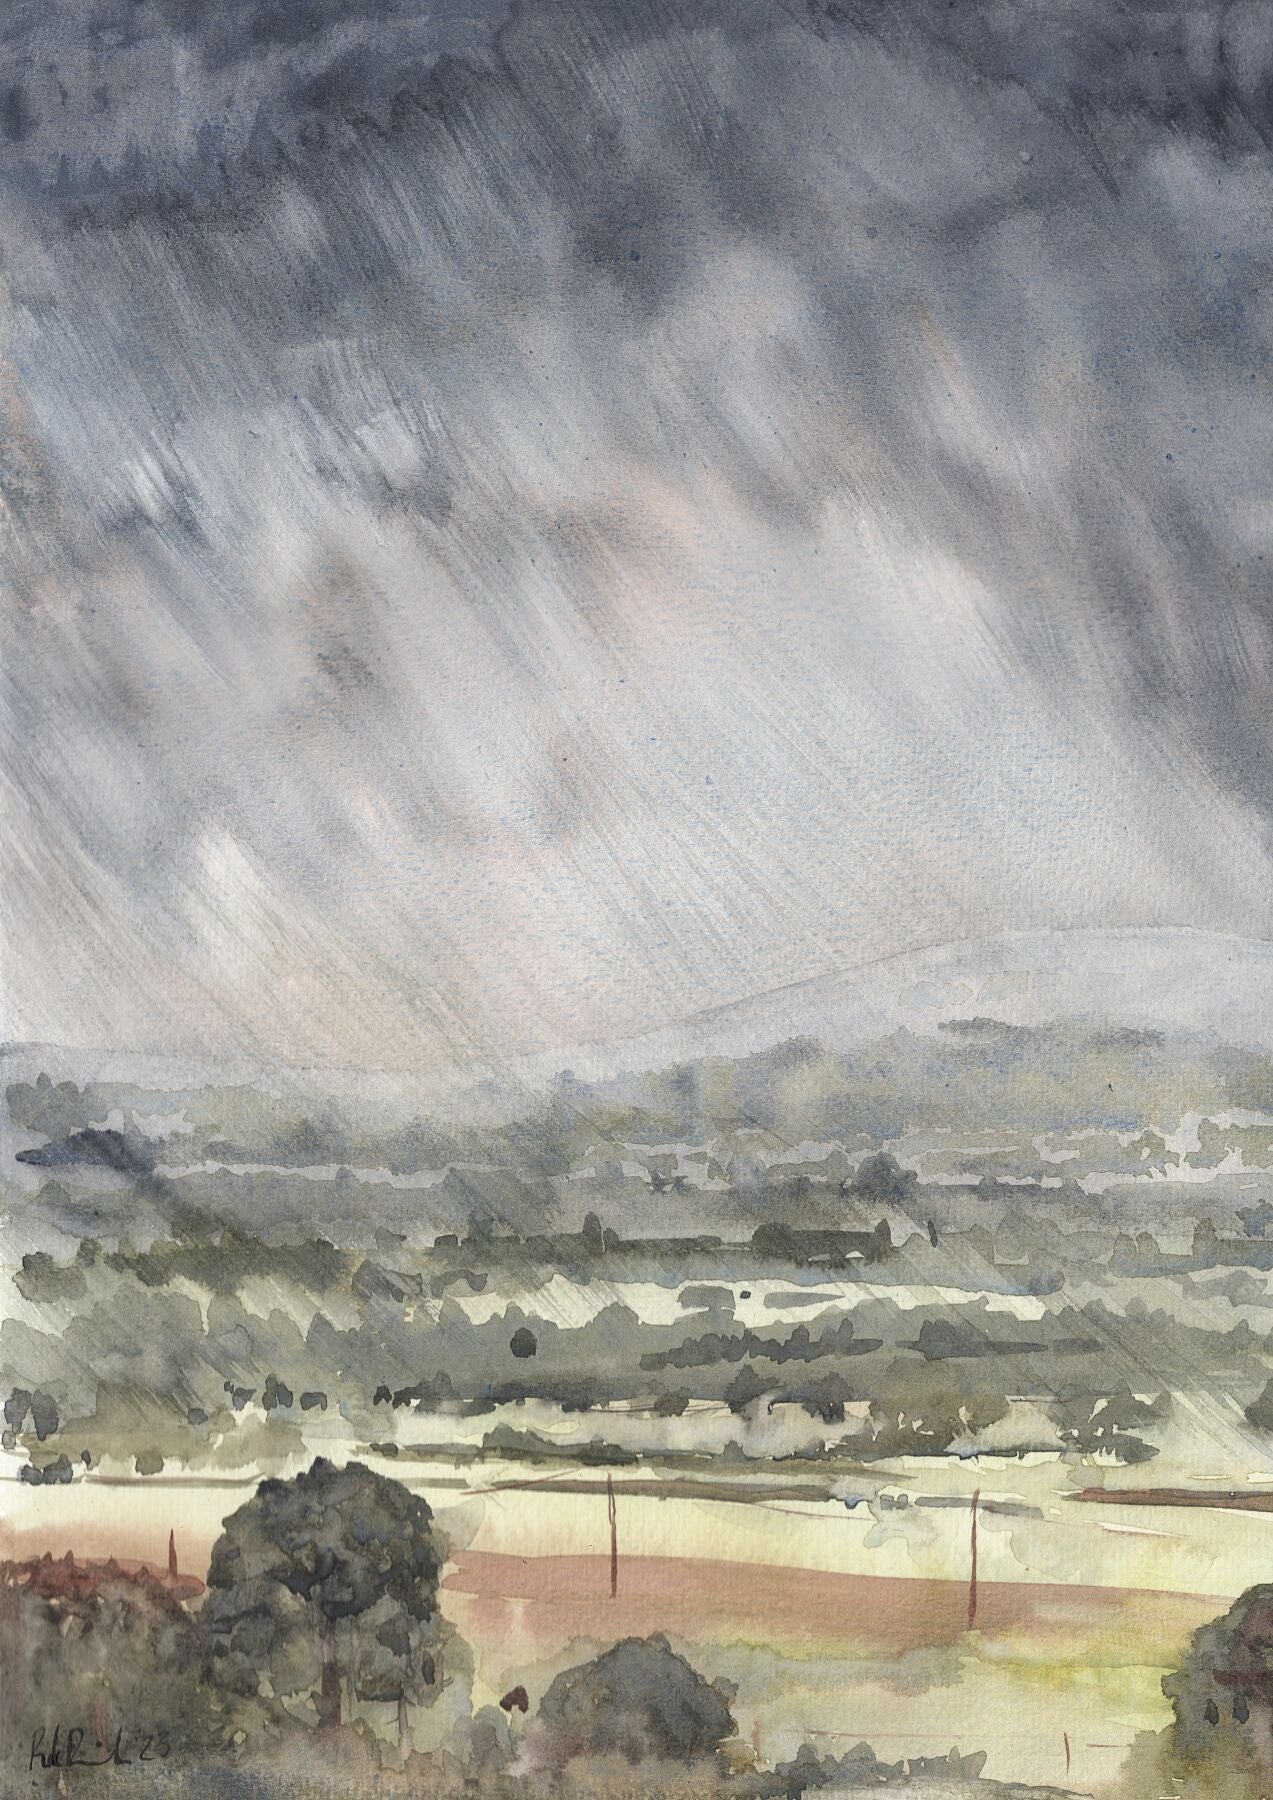 Misty Memories of Shropshire by The Rik Barwick Studio